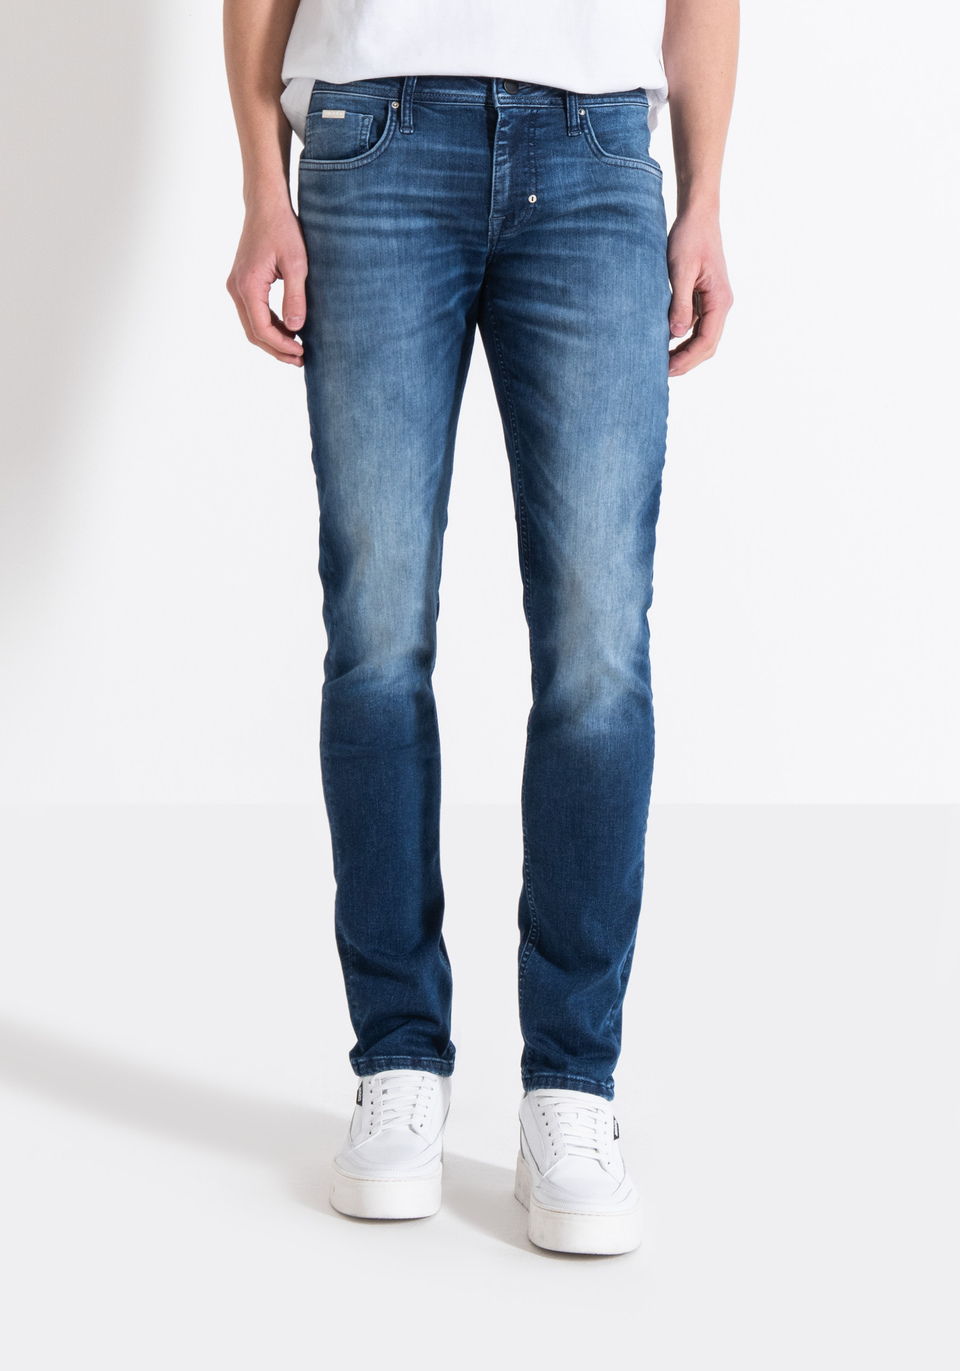 Women's Denim Jeans Fashion High Waist Striaght Leg Long Pants Boyfriend  Casual Comfy Jeans Regular Fit Blue / Black / Light Blue Pants(XS,Light Blue)  - Walmart.com